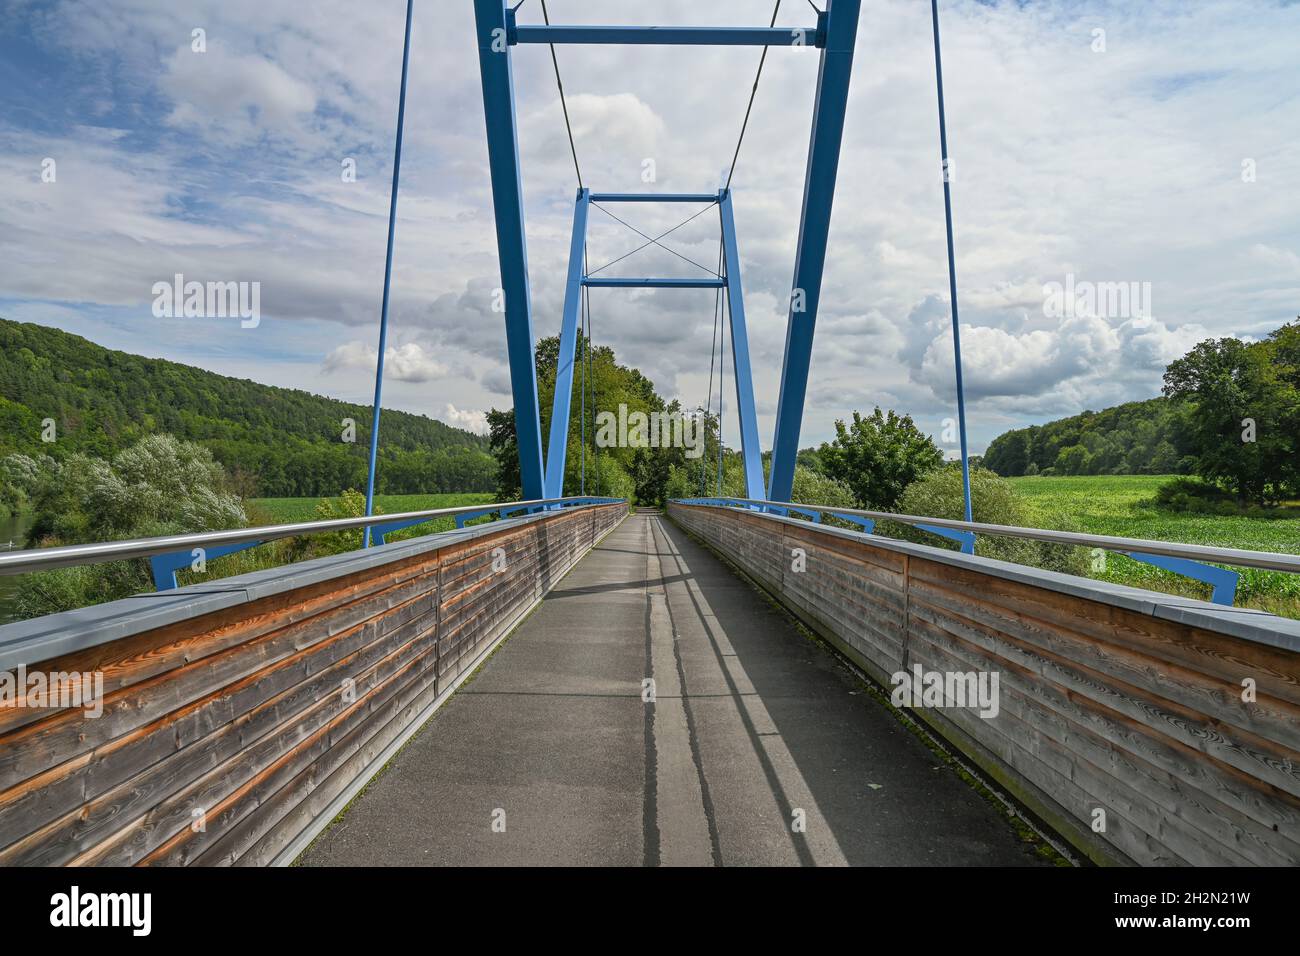 Radwegebrücke bei Frankenroda, Werra, Hessen, Deutschland Foto Stock